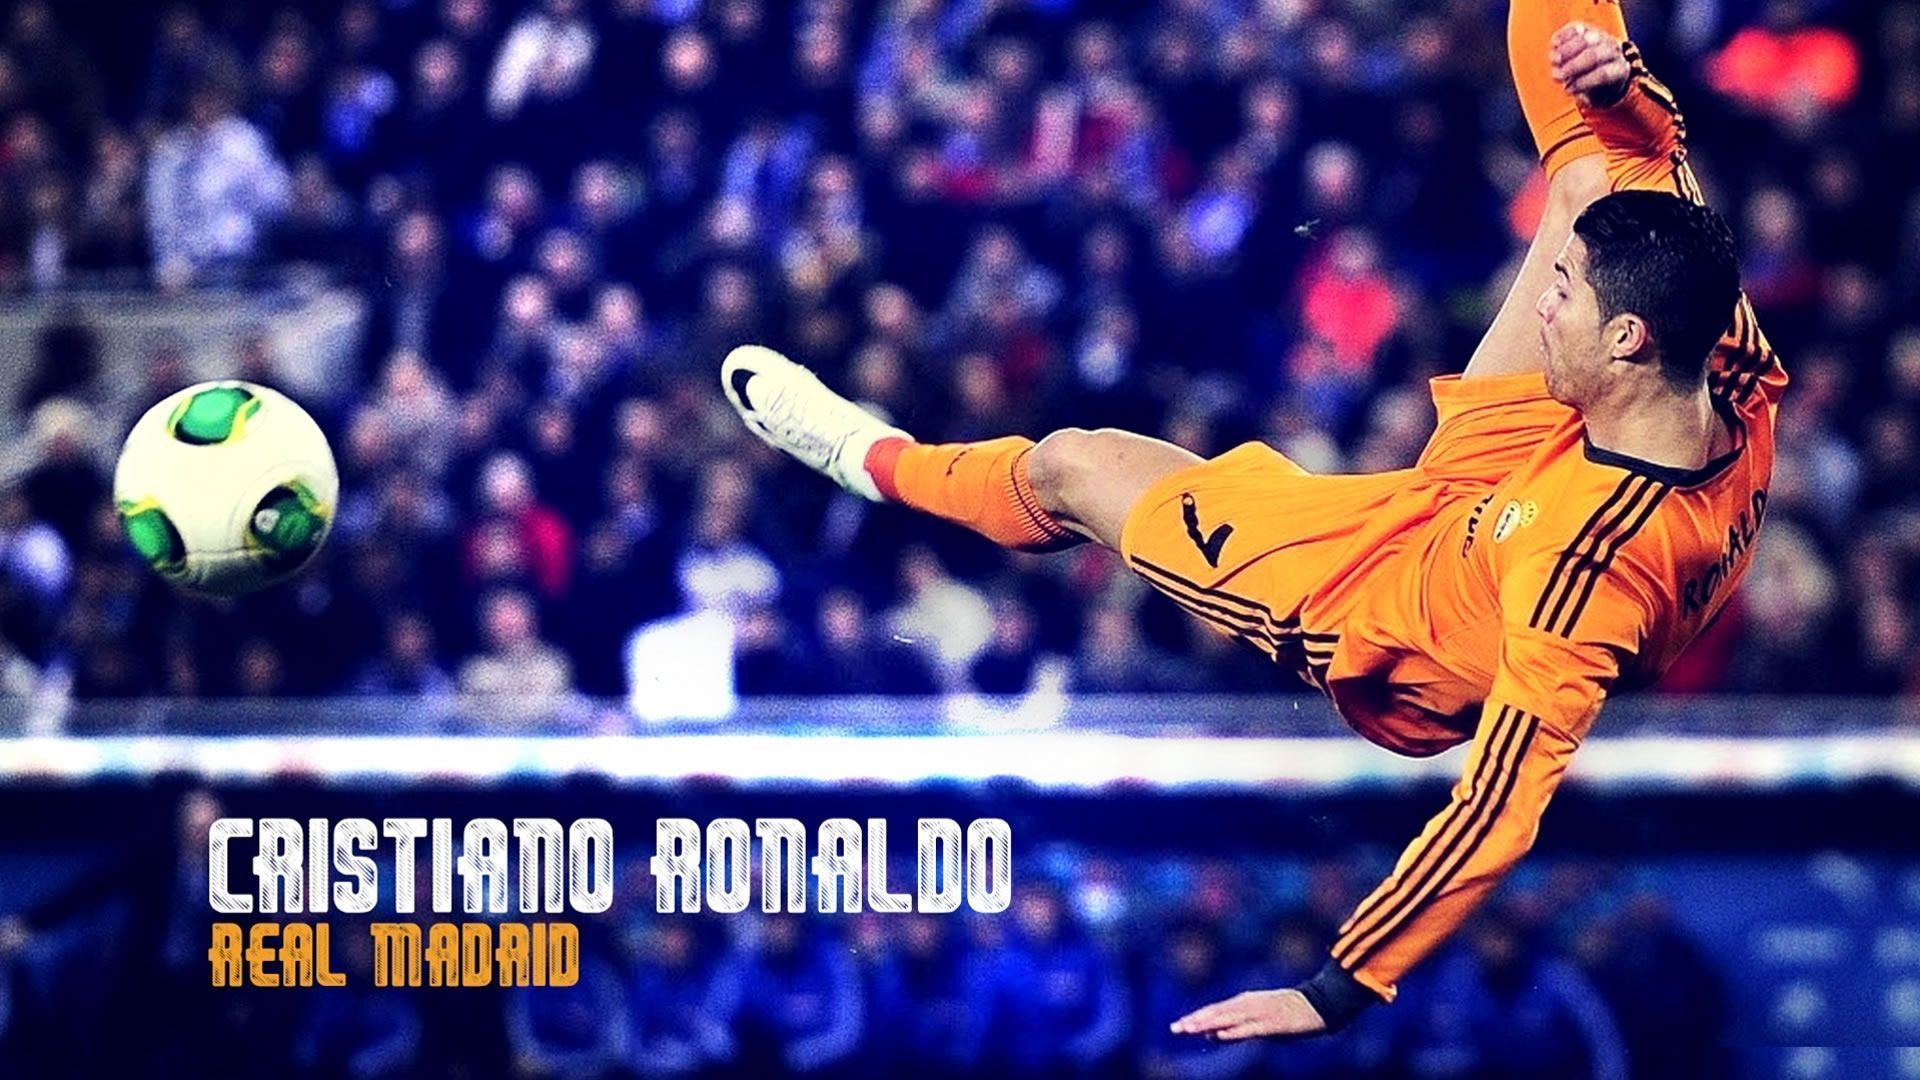 Cristiano Ronaldo bicycle kick wallpaper - Cristiano Ronaldo ...